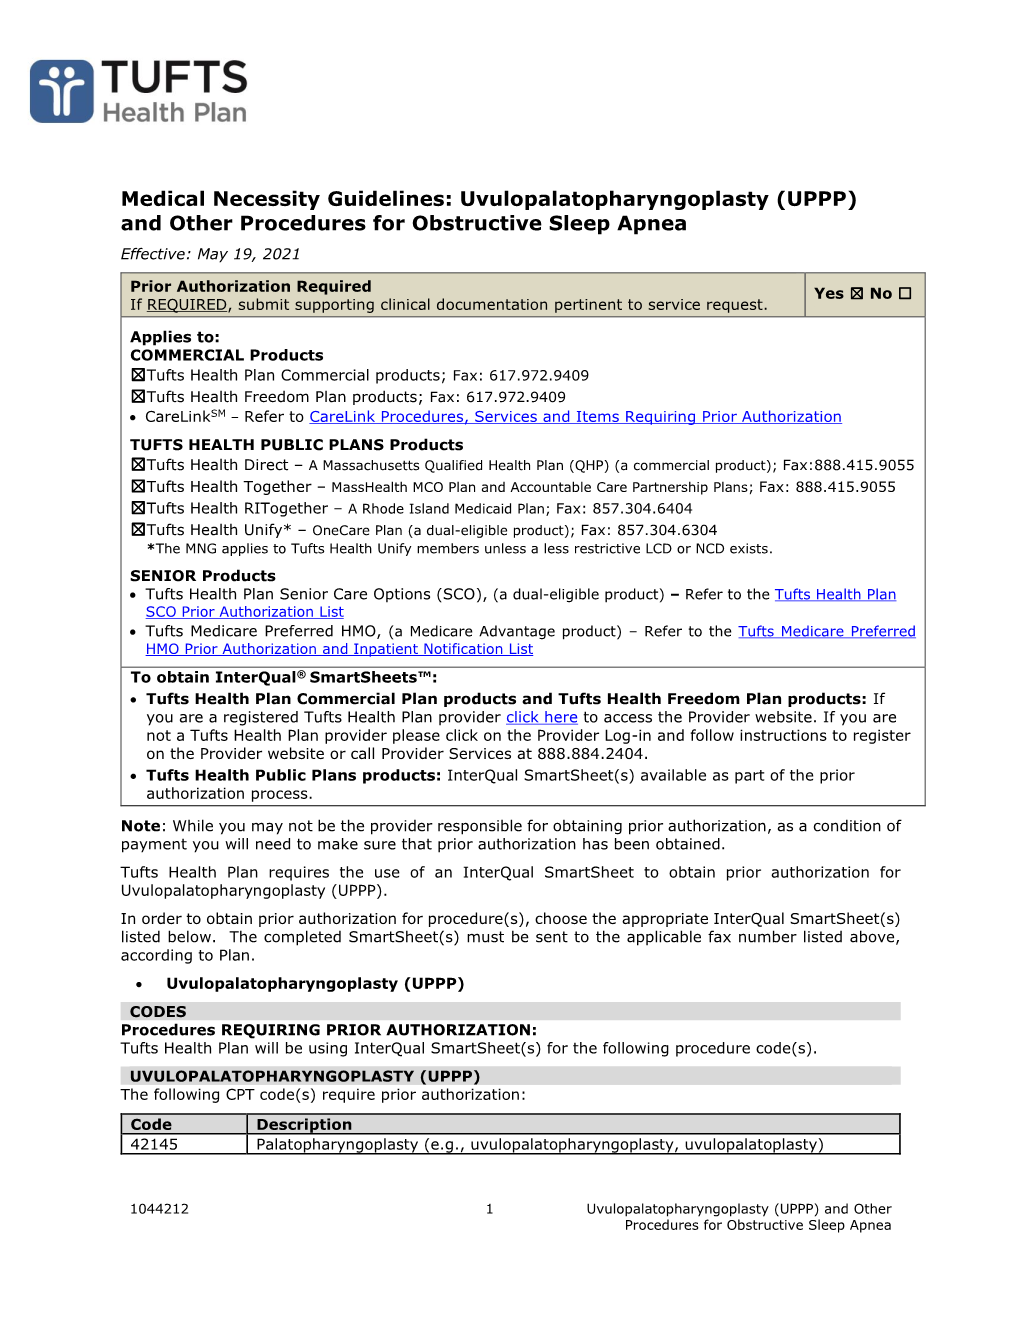 Uvulopalatopharyngoplasty (UPPP) and Other Procedures for Obstructive Sleep Apnea Effective: May 19, 2021